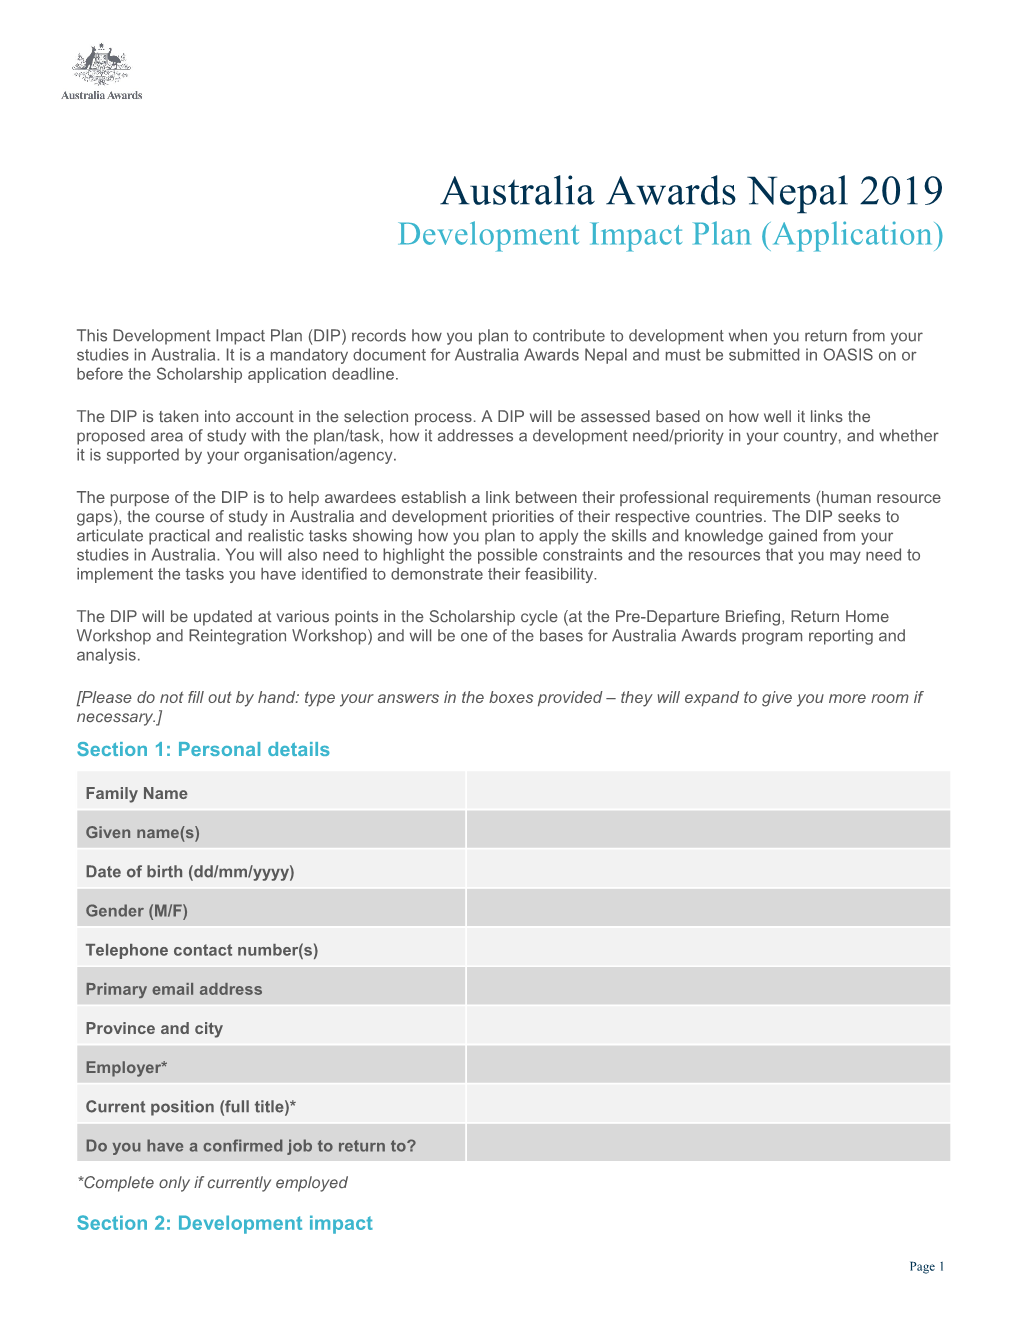 Australia Awardsnepal 2019 Development Impact Plan(Application)